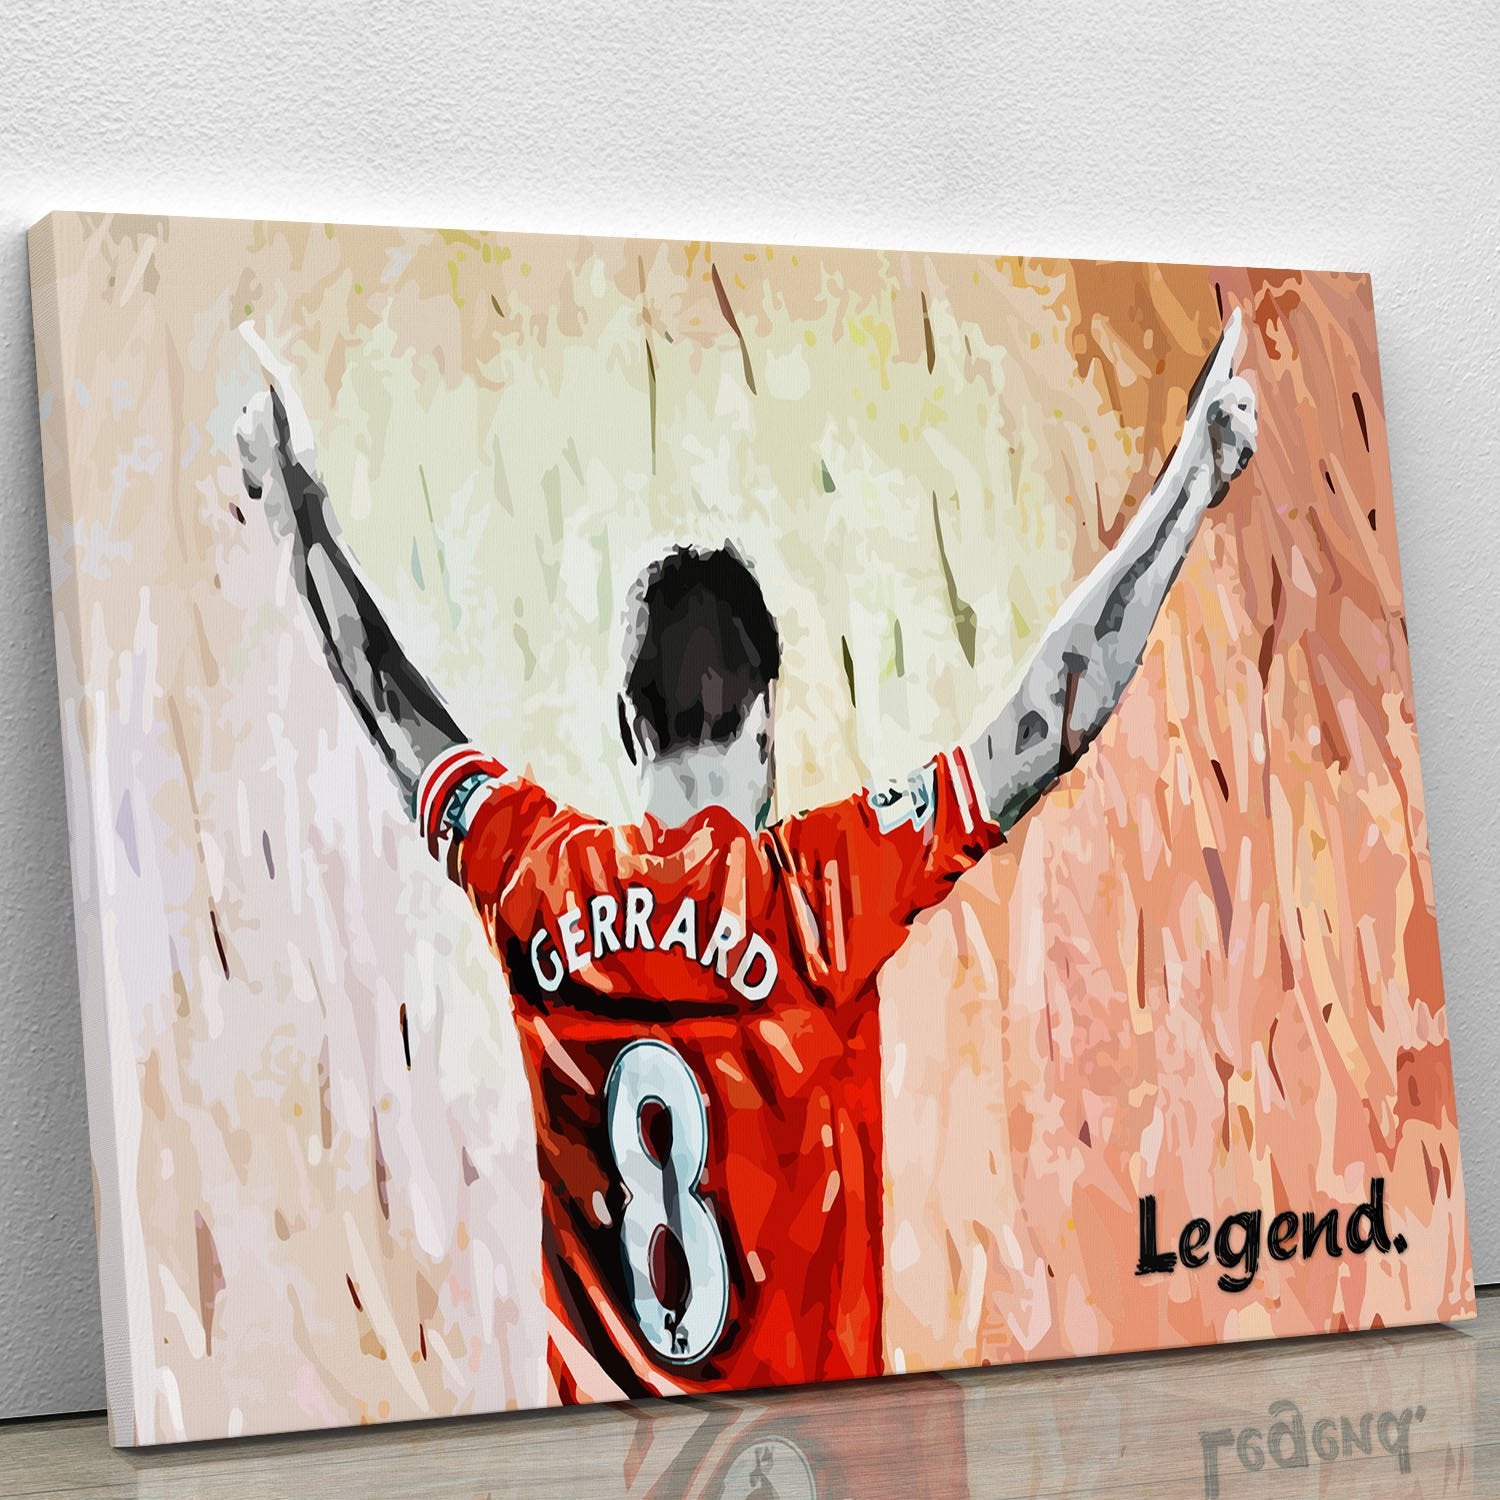 Steven Gerrard Legend Canvas Print or Poster